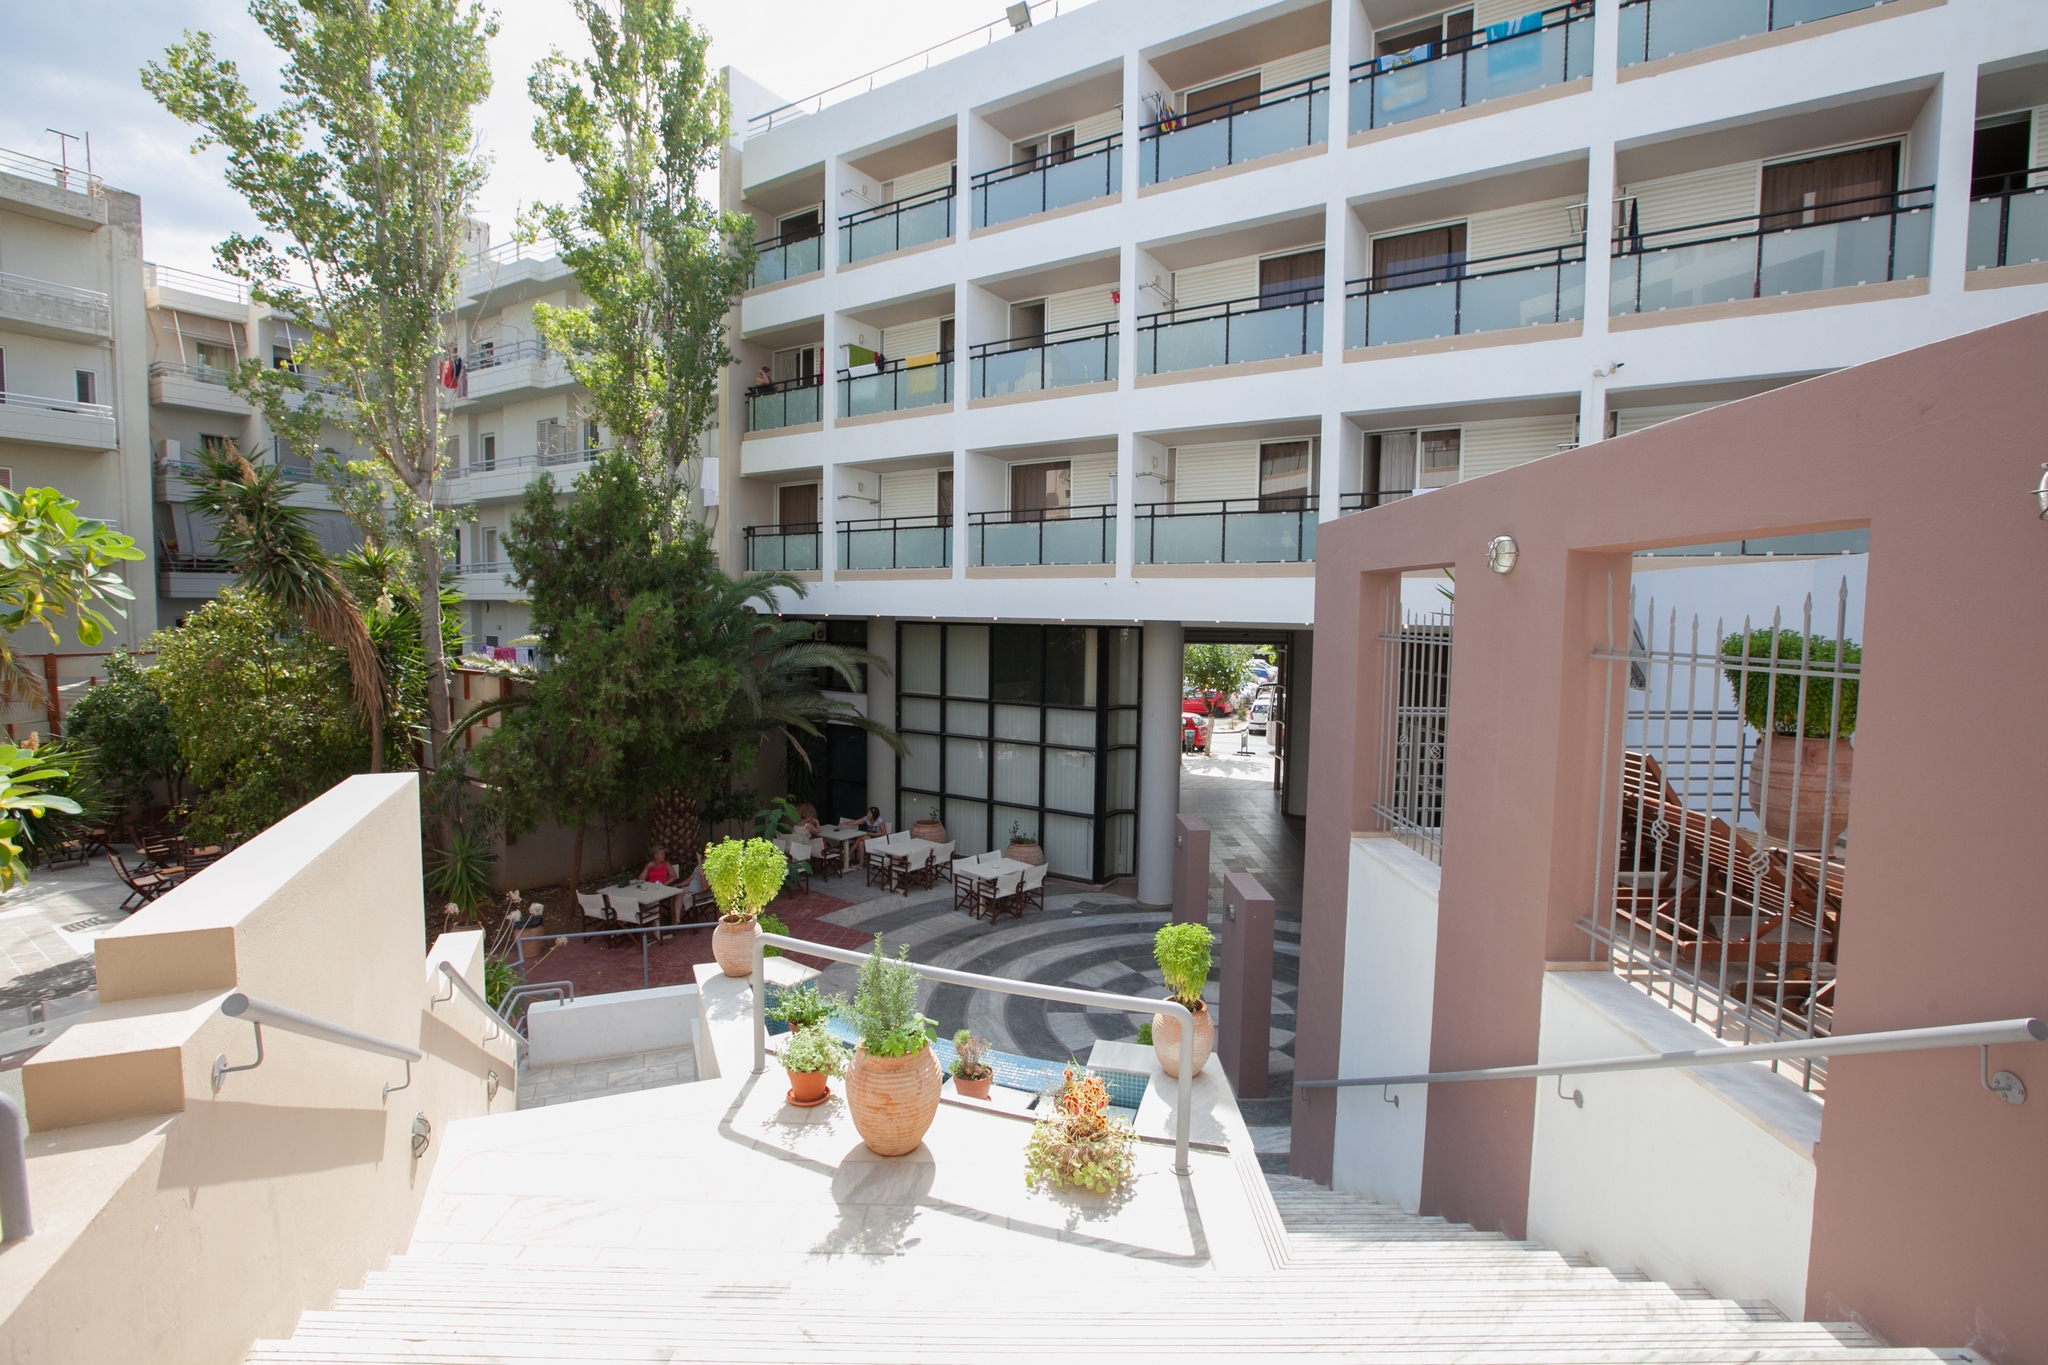 4* Santa Marina Hotel - Άγιος Νικόλαος Κρήτης ✦ 4 Ημέρες